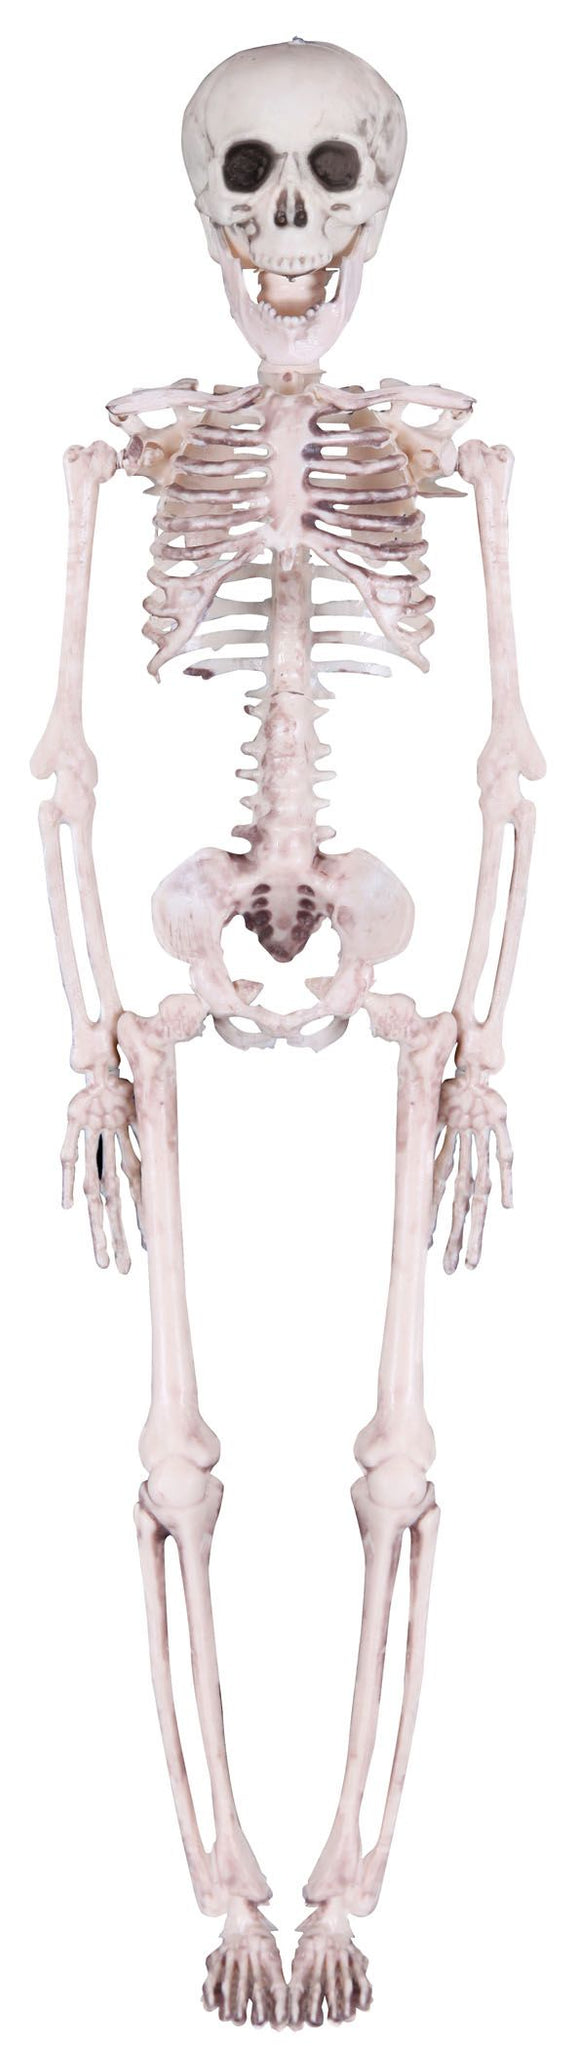 16in Realistic Plastic Skeleton